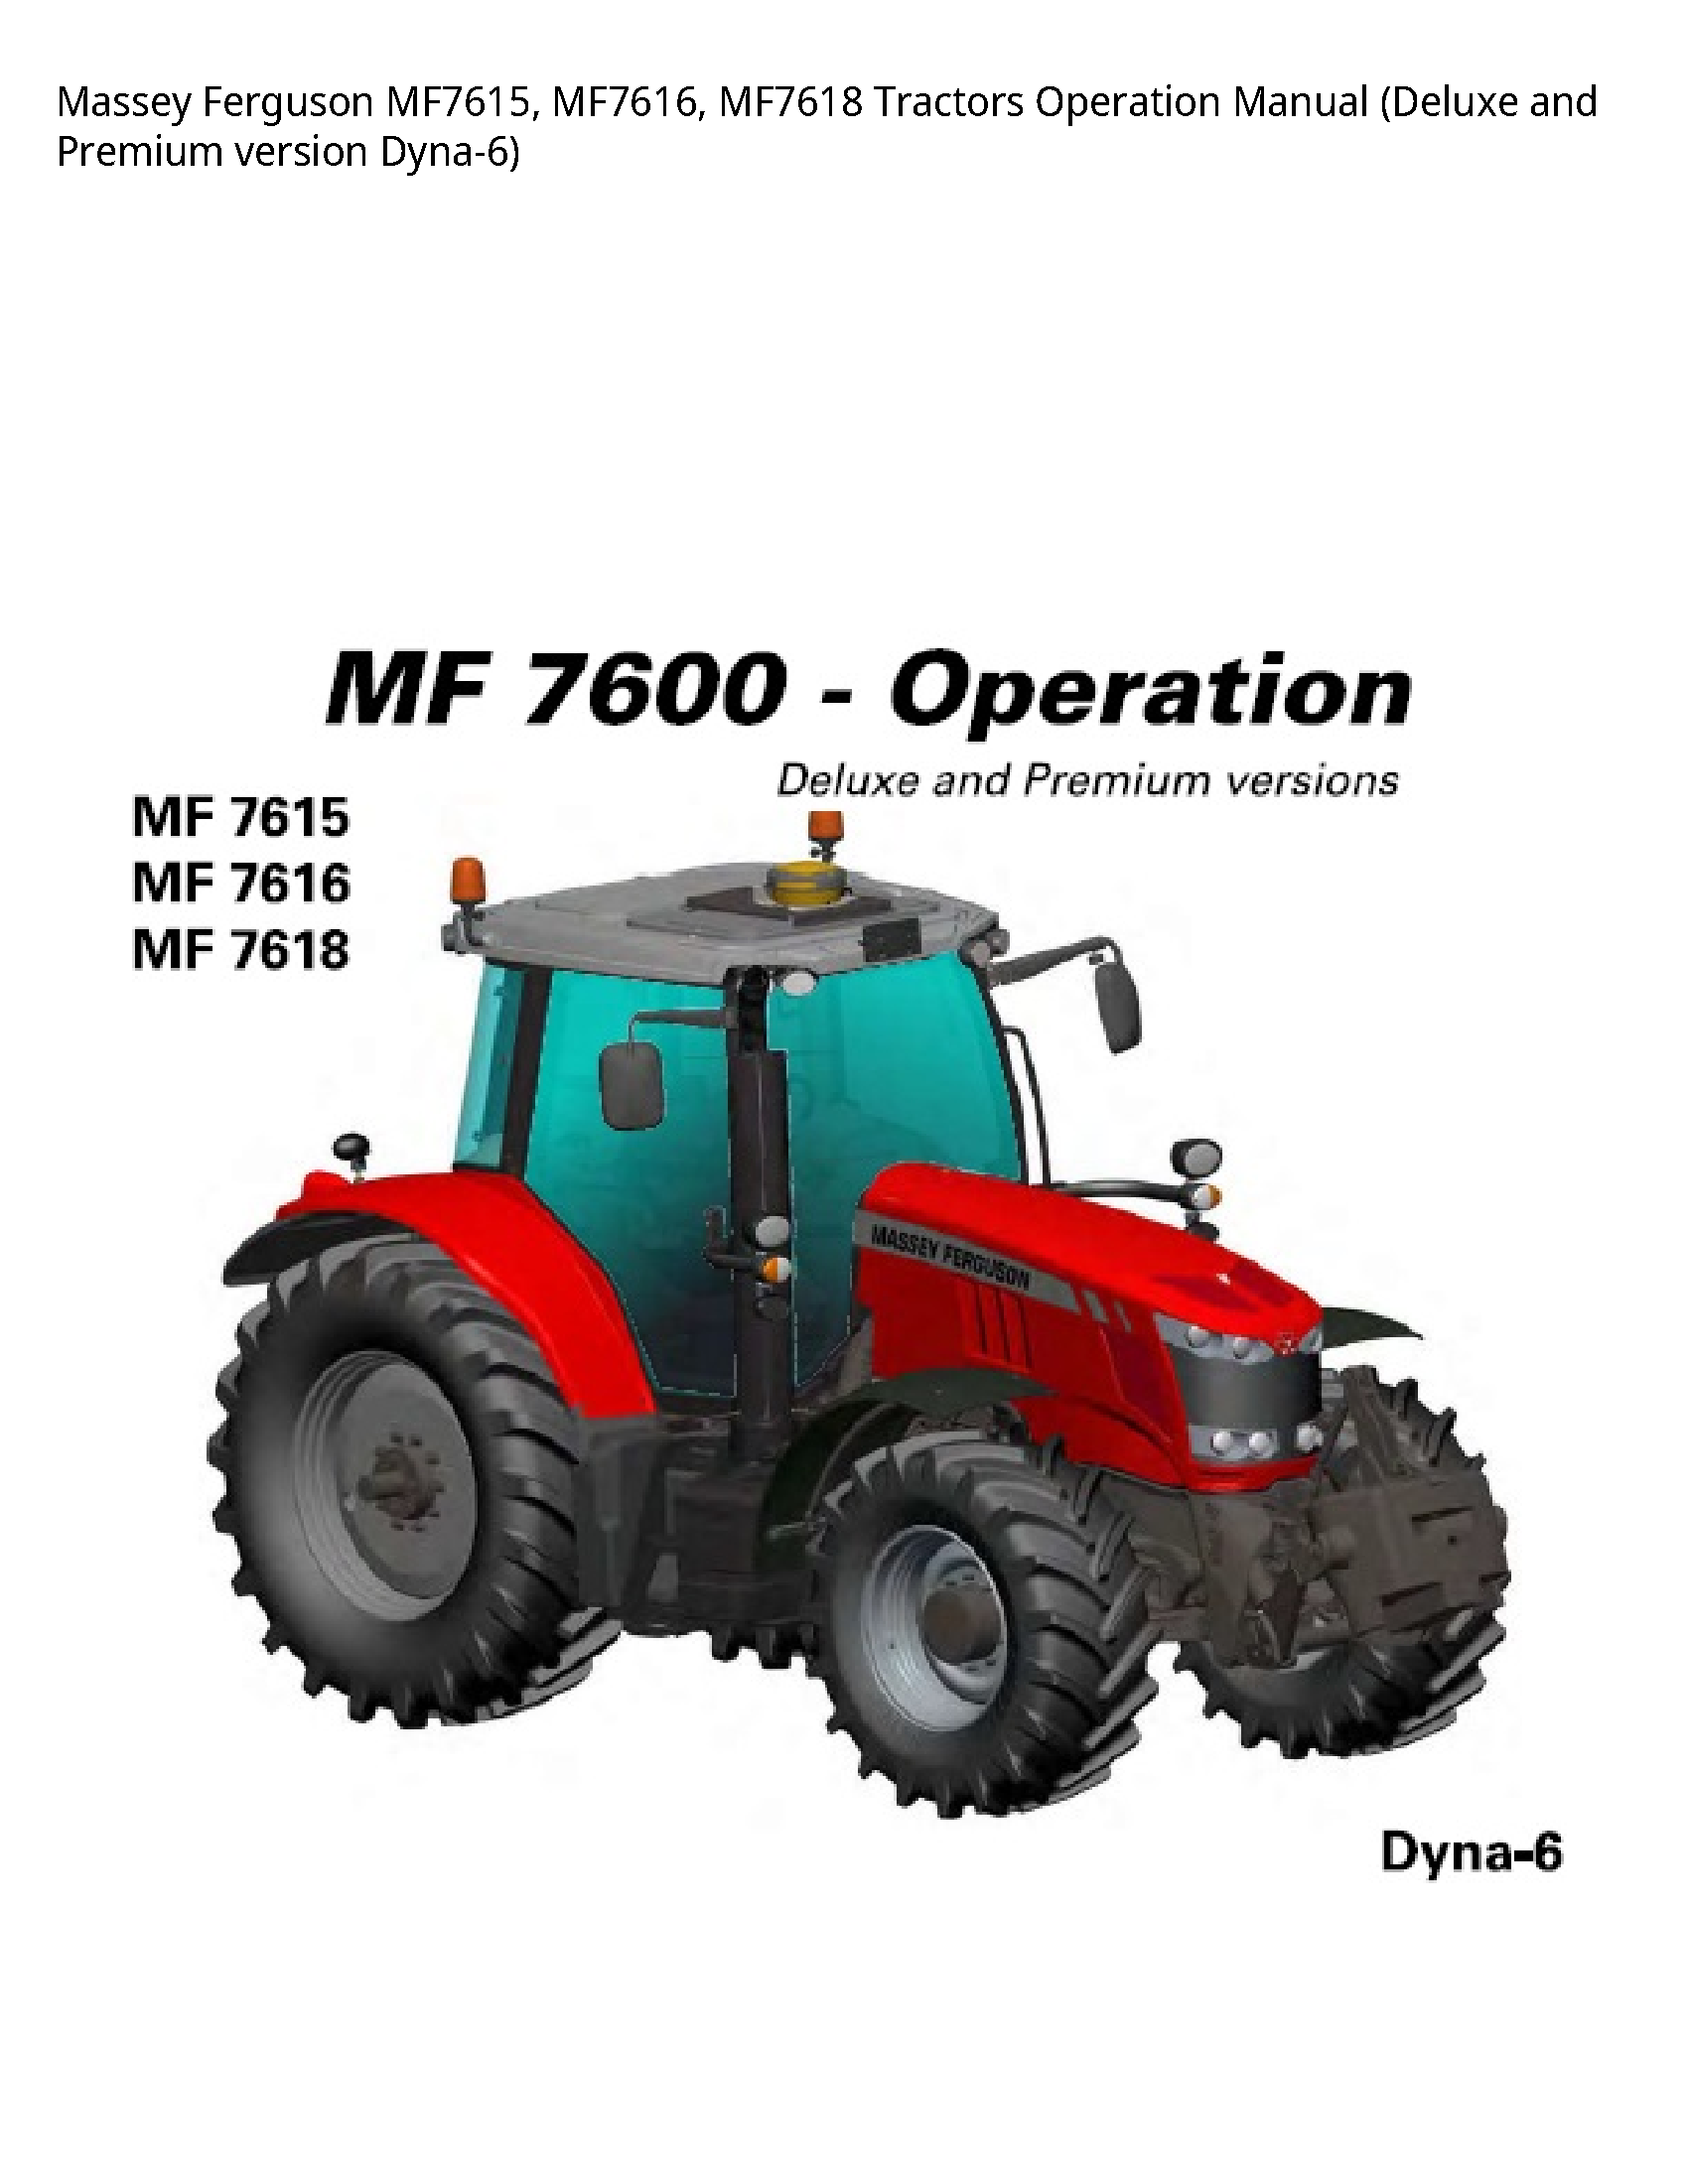 Massey Ferguson MF7615 Tractors Operation manual